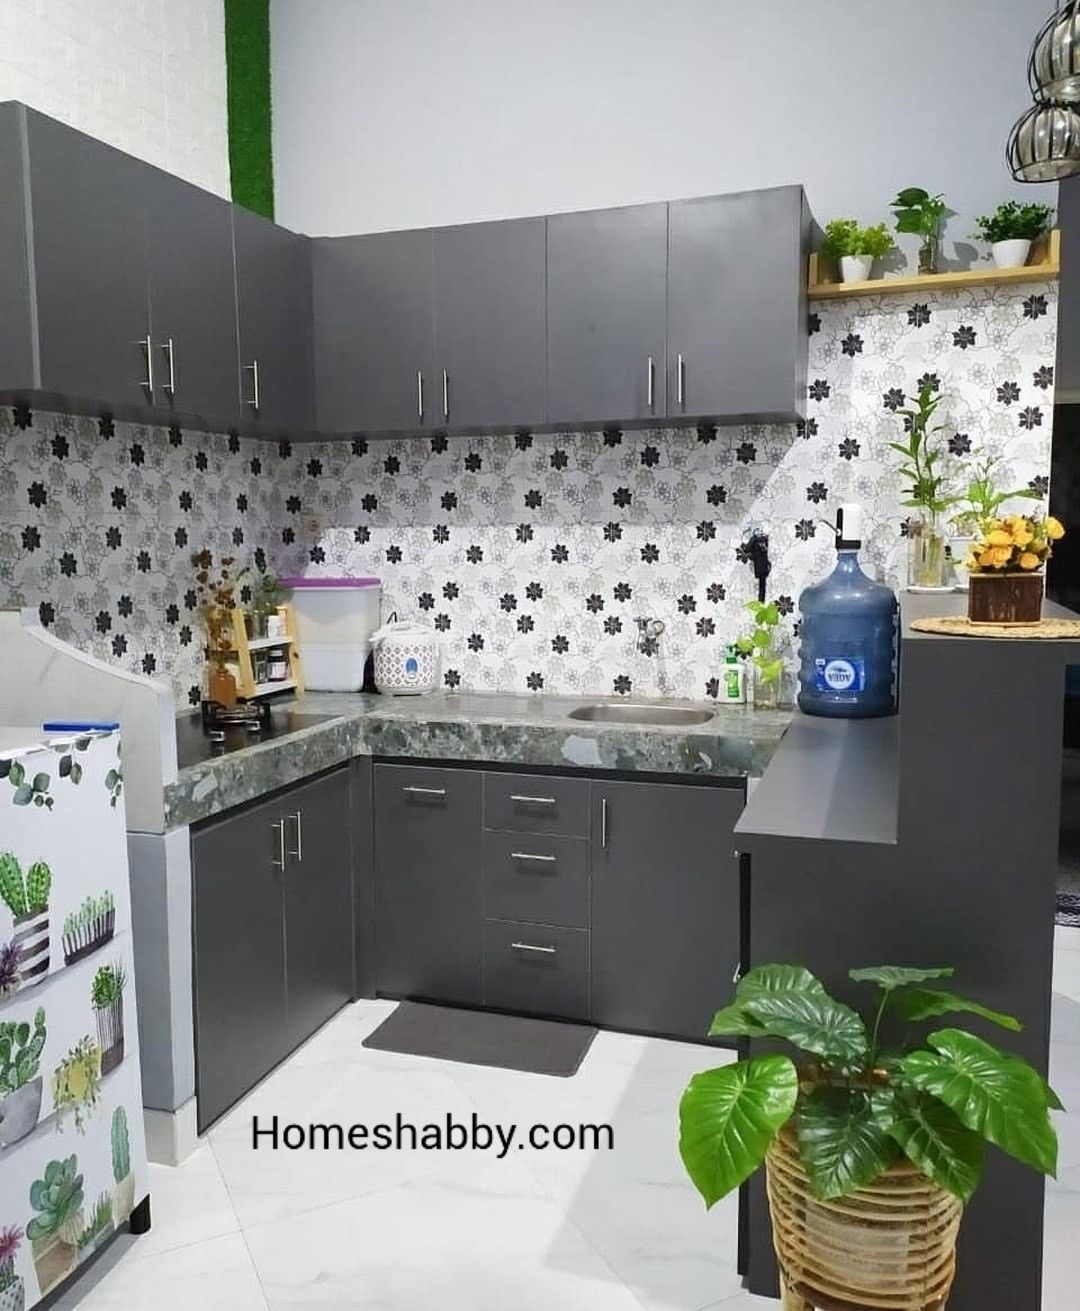 Inspirasi Kitchen Set Rumah Minimalis Dengan Harga Murah Homeshabbycom Design Home Plans